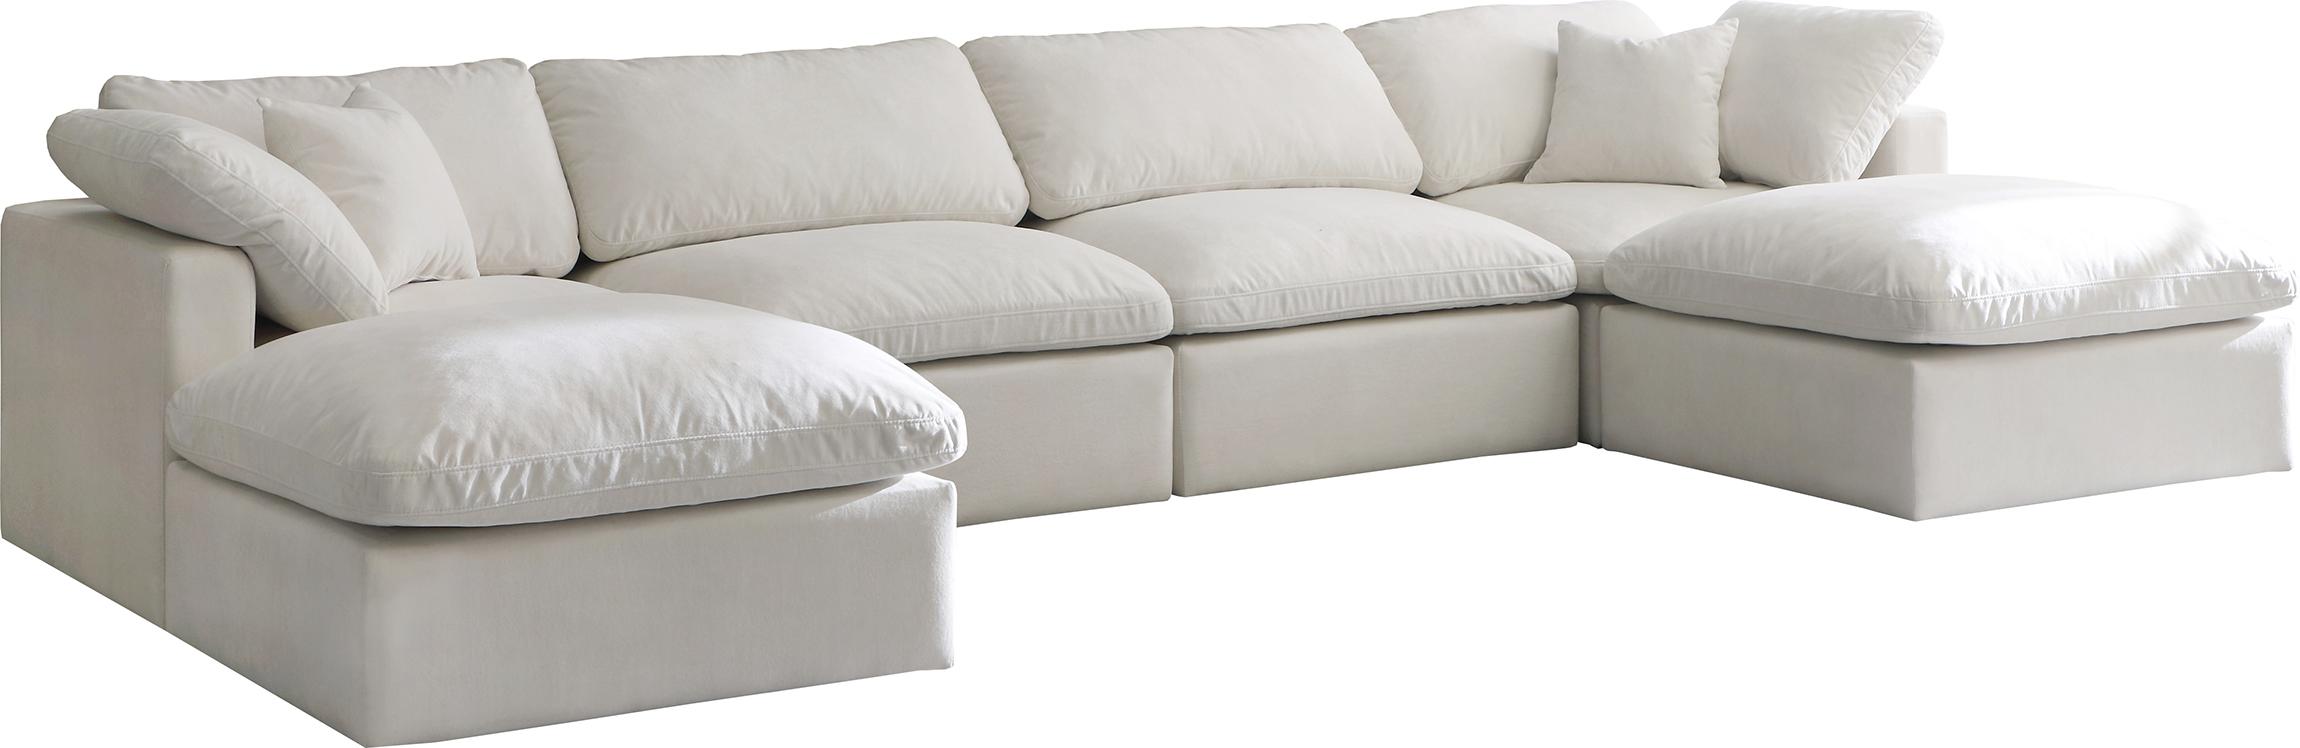 Contemporary, Modern Modular Sectional Sofa 602Cream-Sec6B 602Cream-Sec6B in Cream Fabric